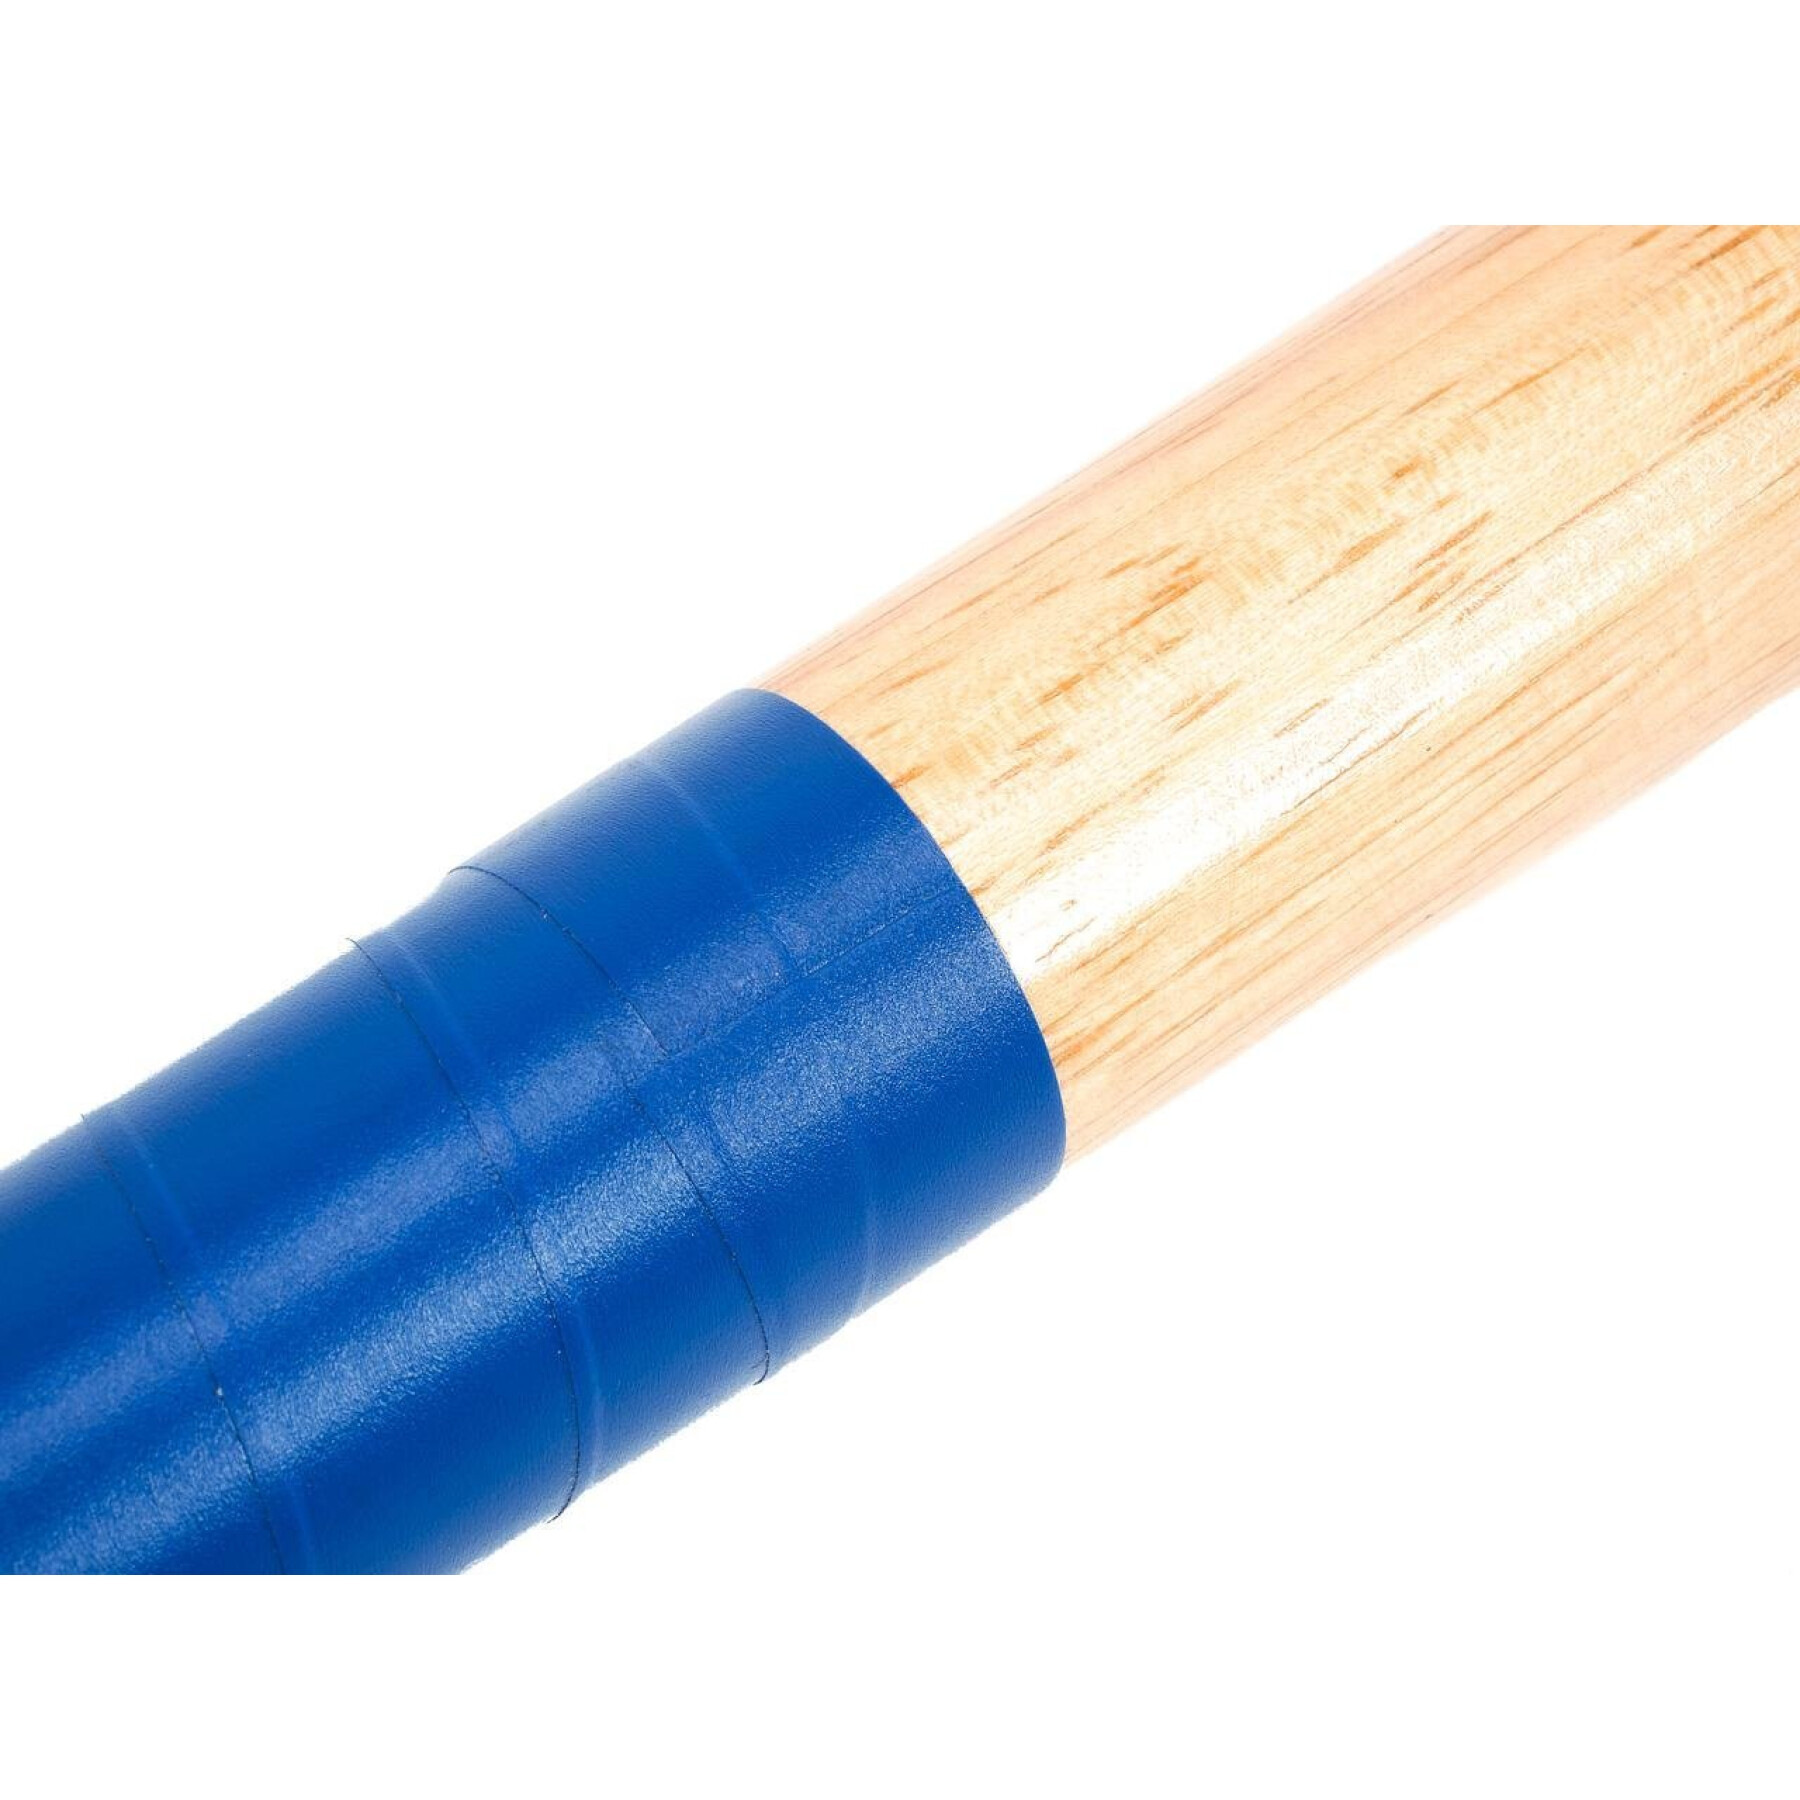 Wooden baseball bat 32" Tremblay